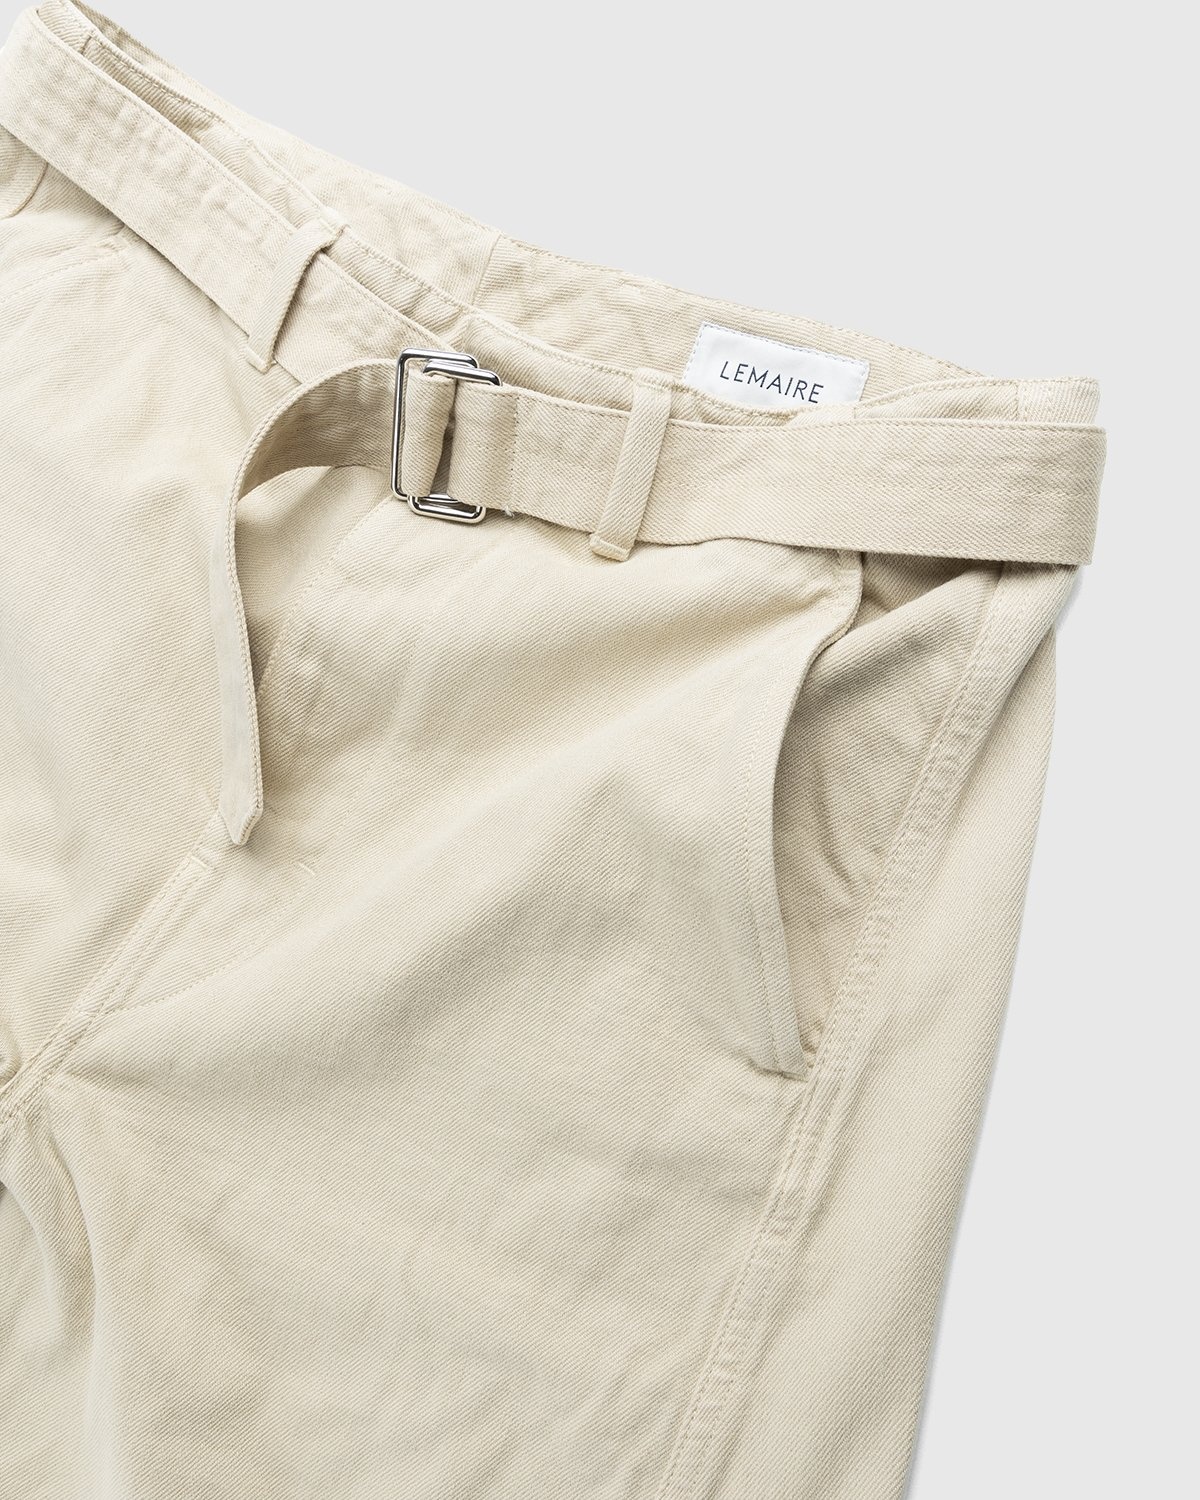 Lemaire – Rinsed Denim Twisted Pants Saltpeter - Pants - Beige - Image 4